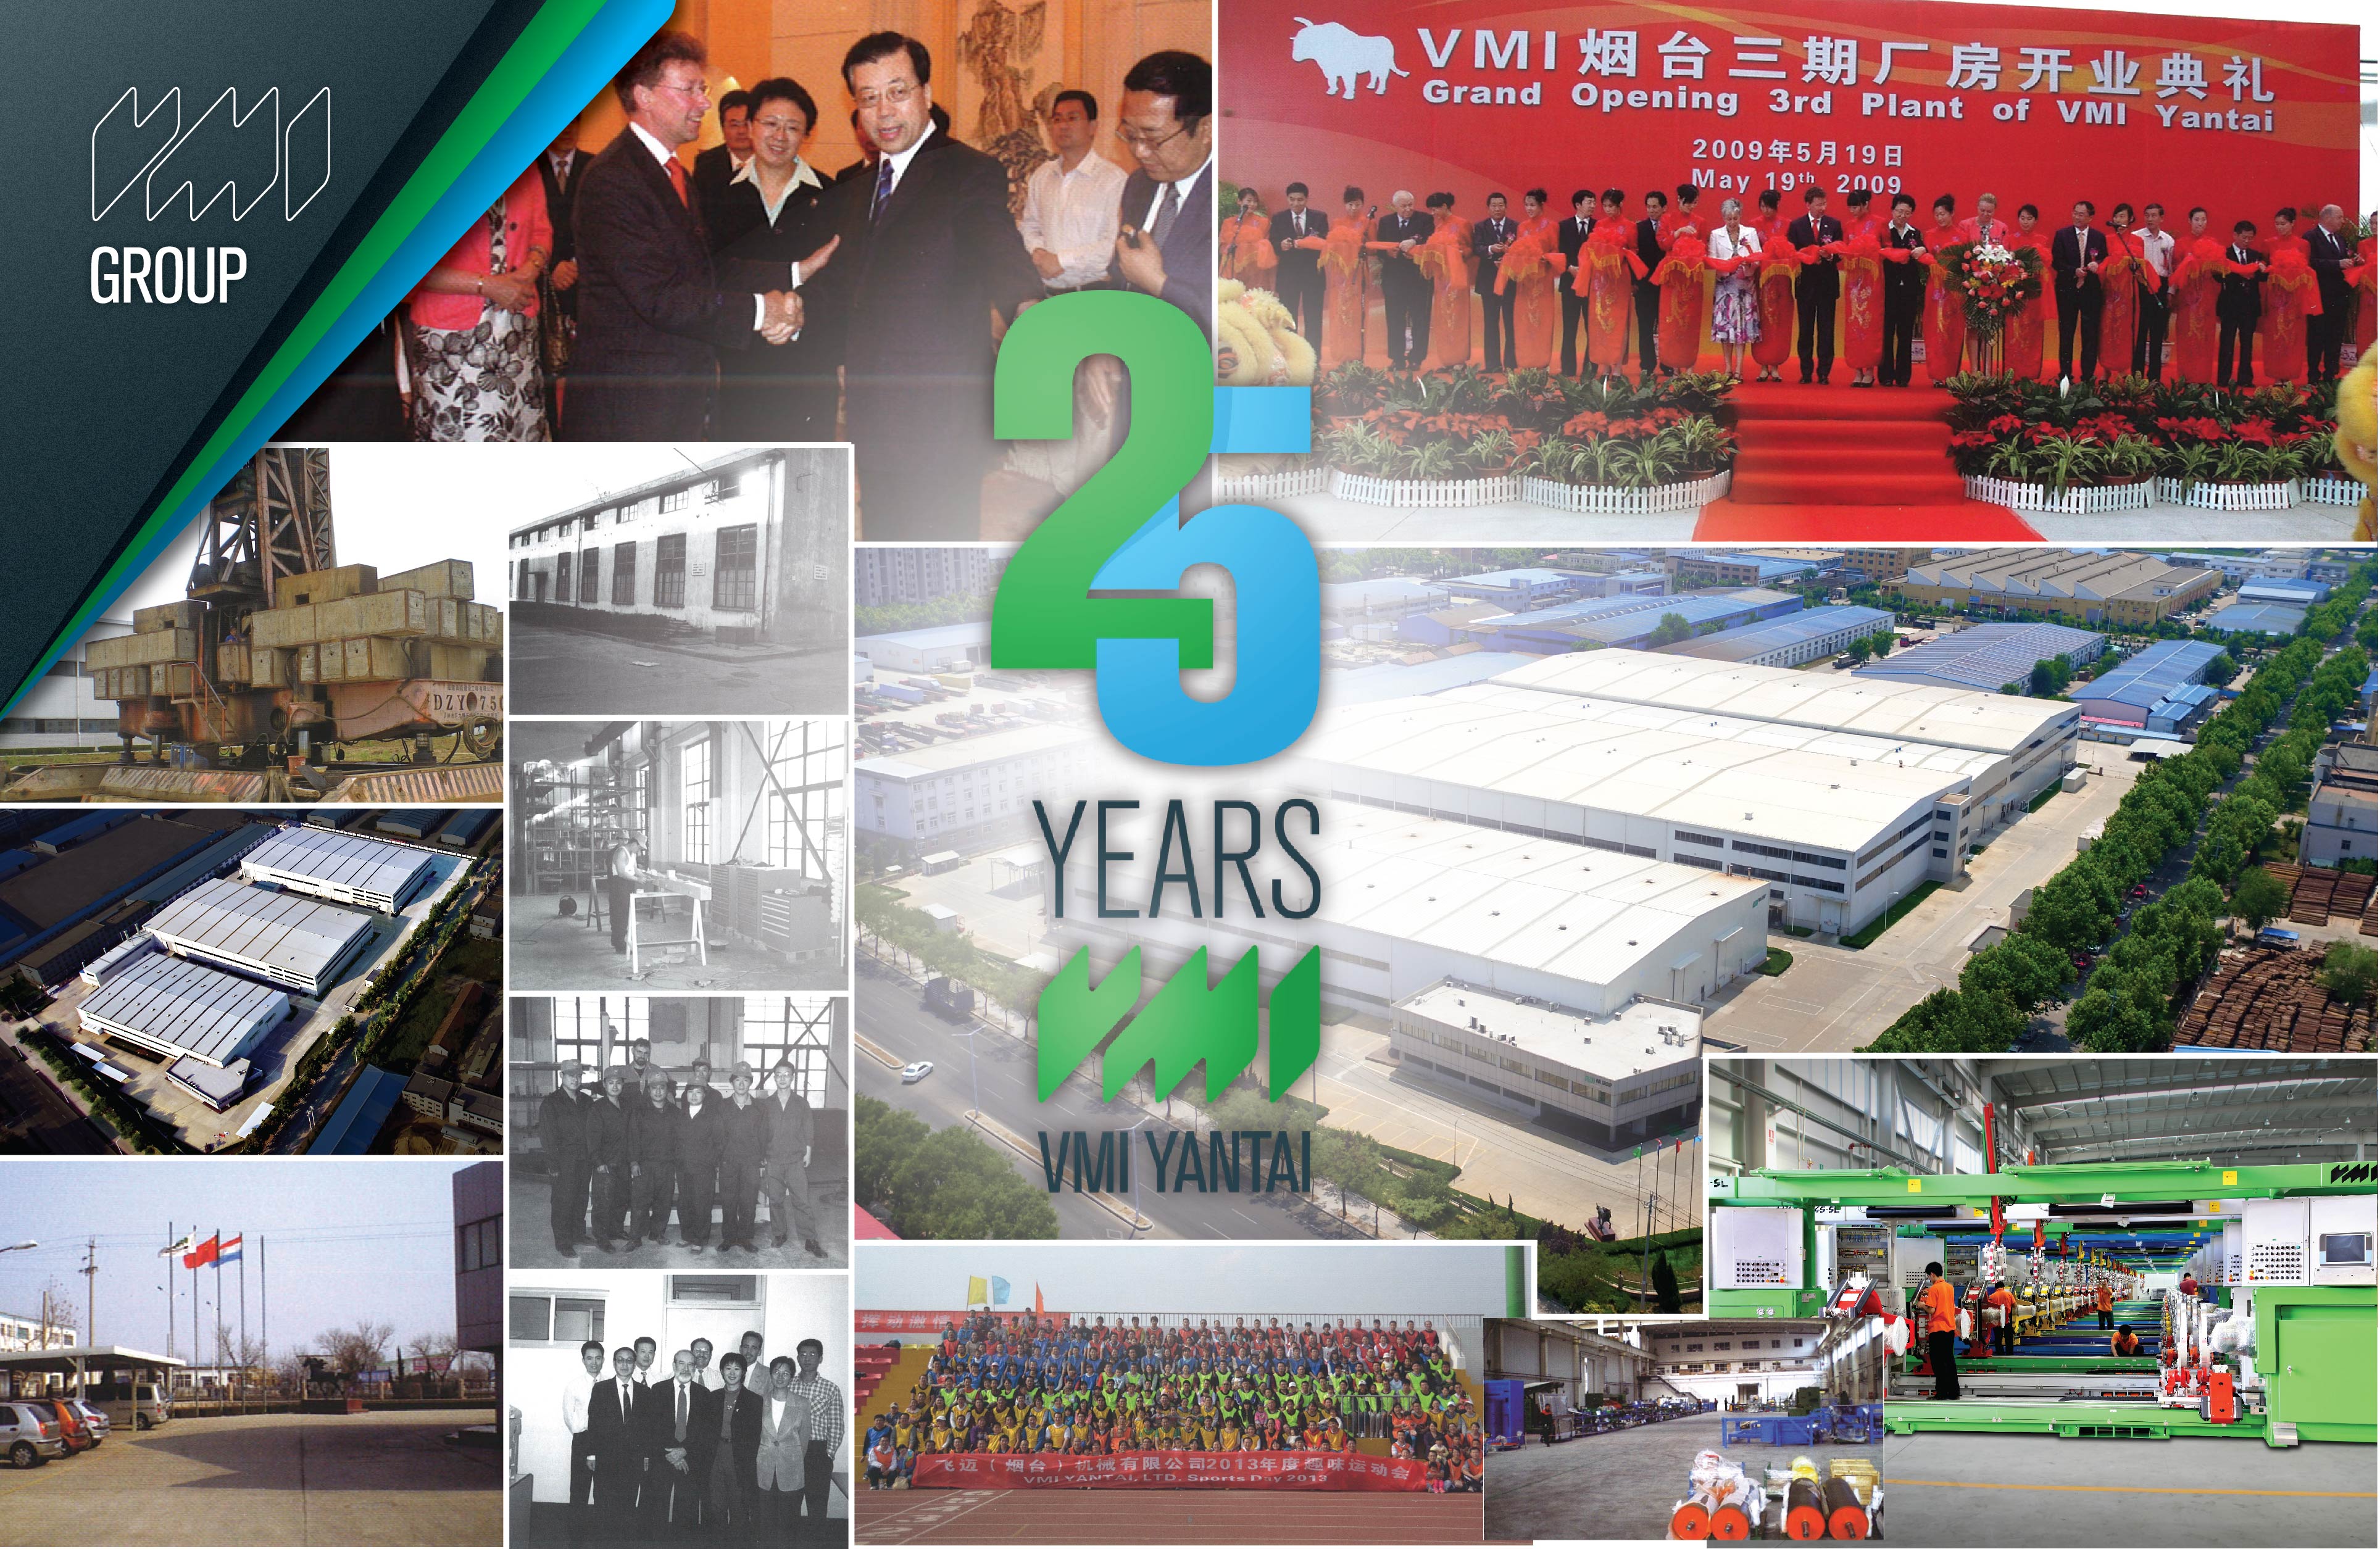 https://cn.vmi-group.com/app/uploads/2021/11/Yantai-25th-anniversary-.jpg